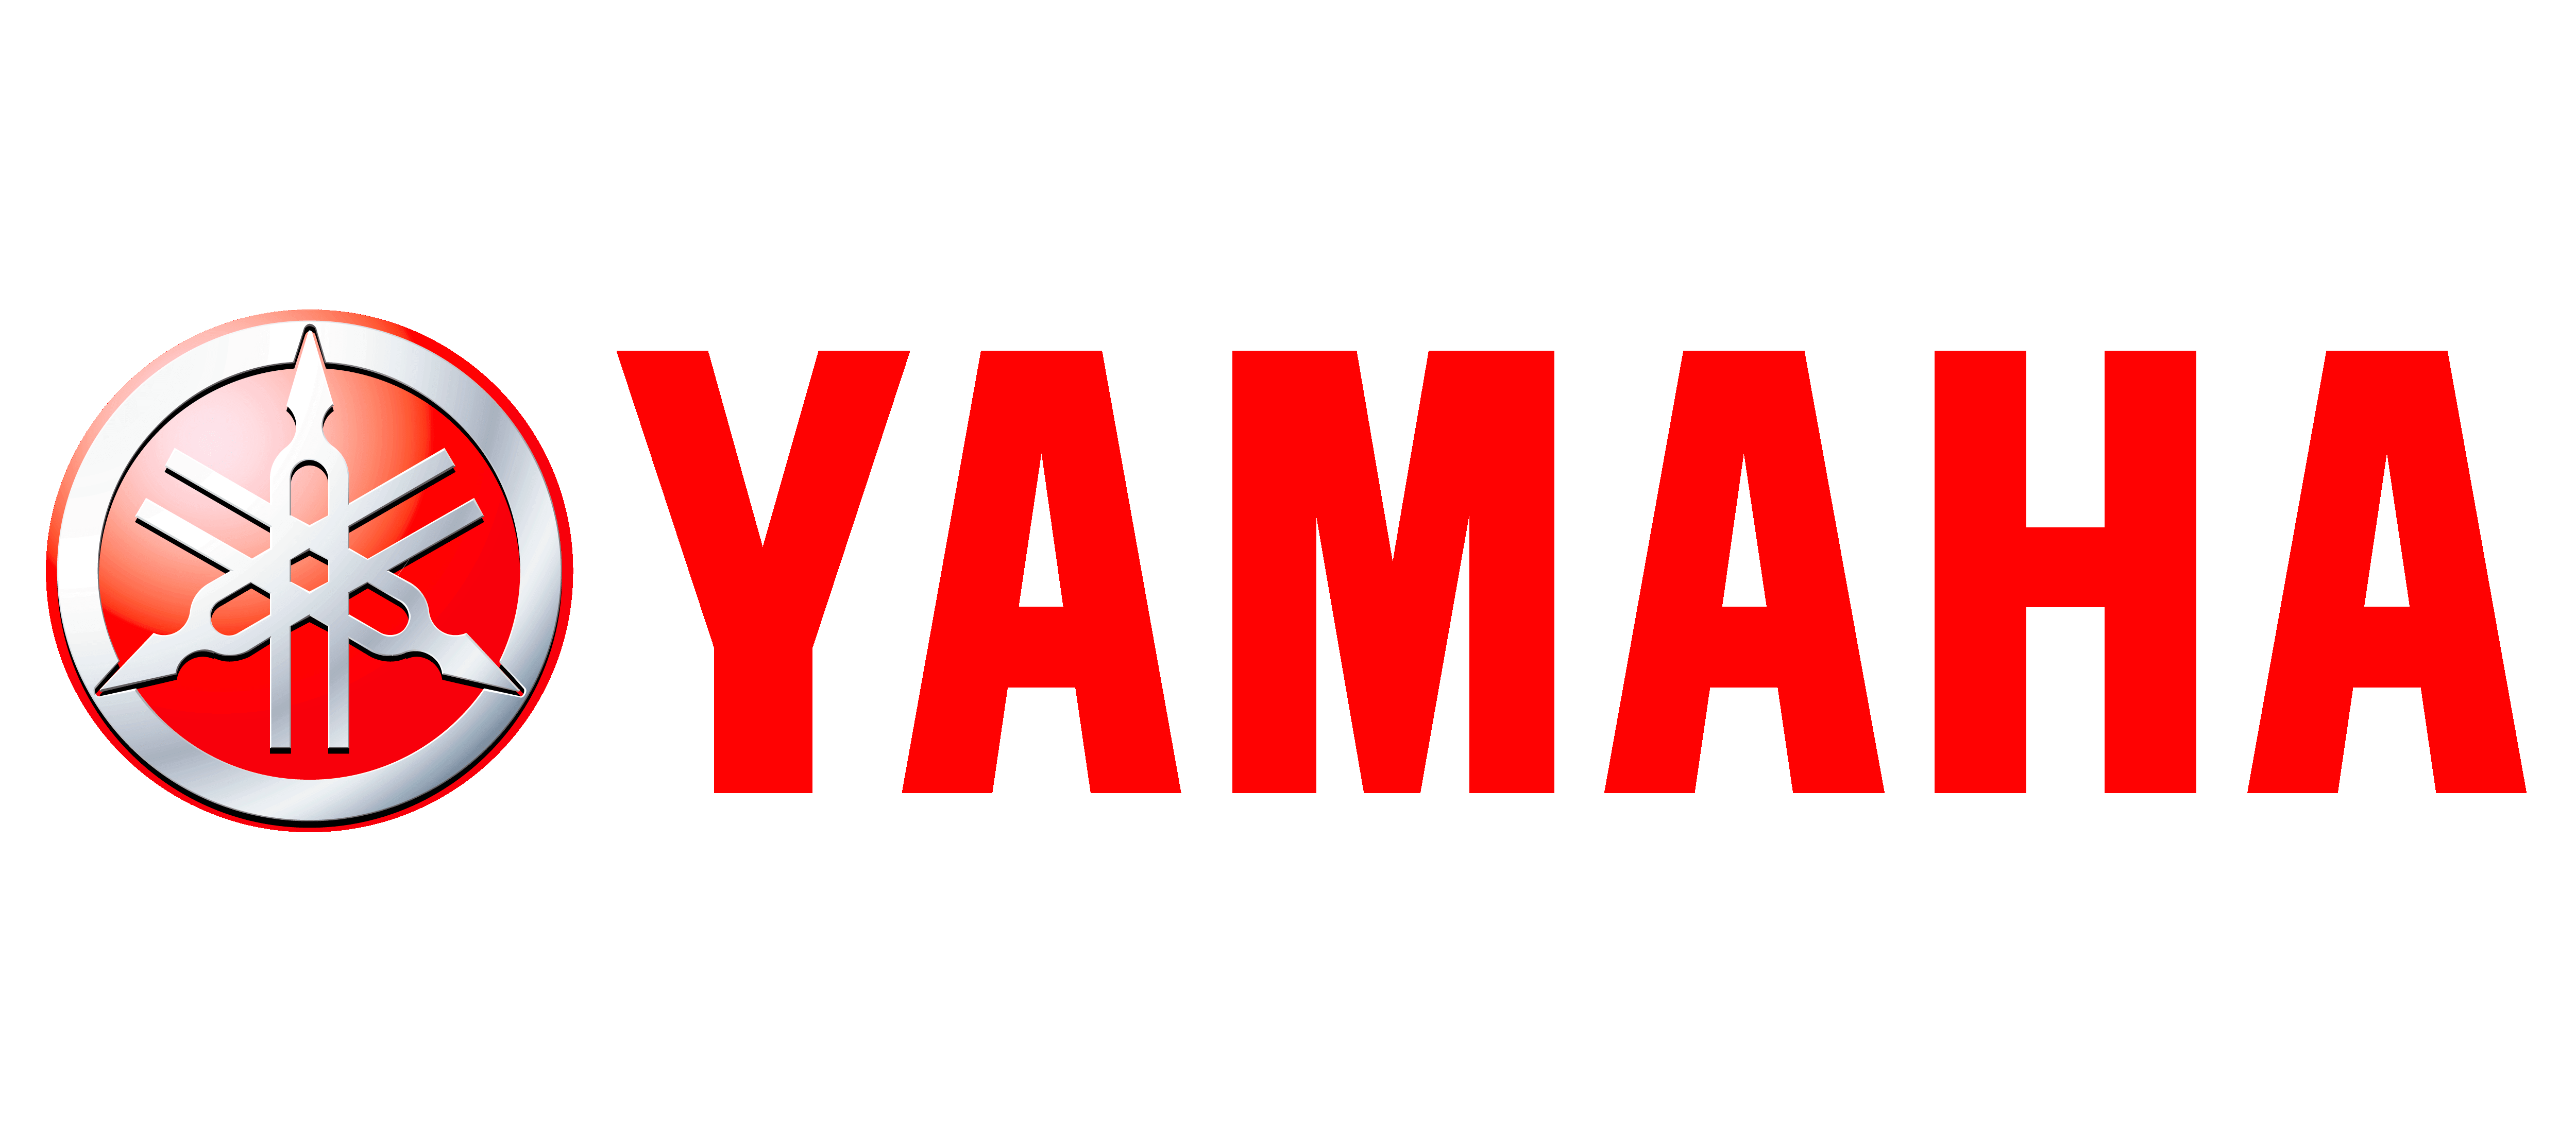 Information About The Company Yamaha - Yamaha, Transparent background PNG HD thumbnail